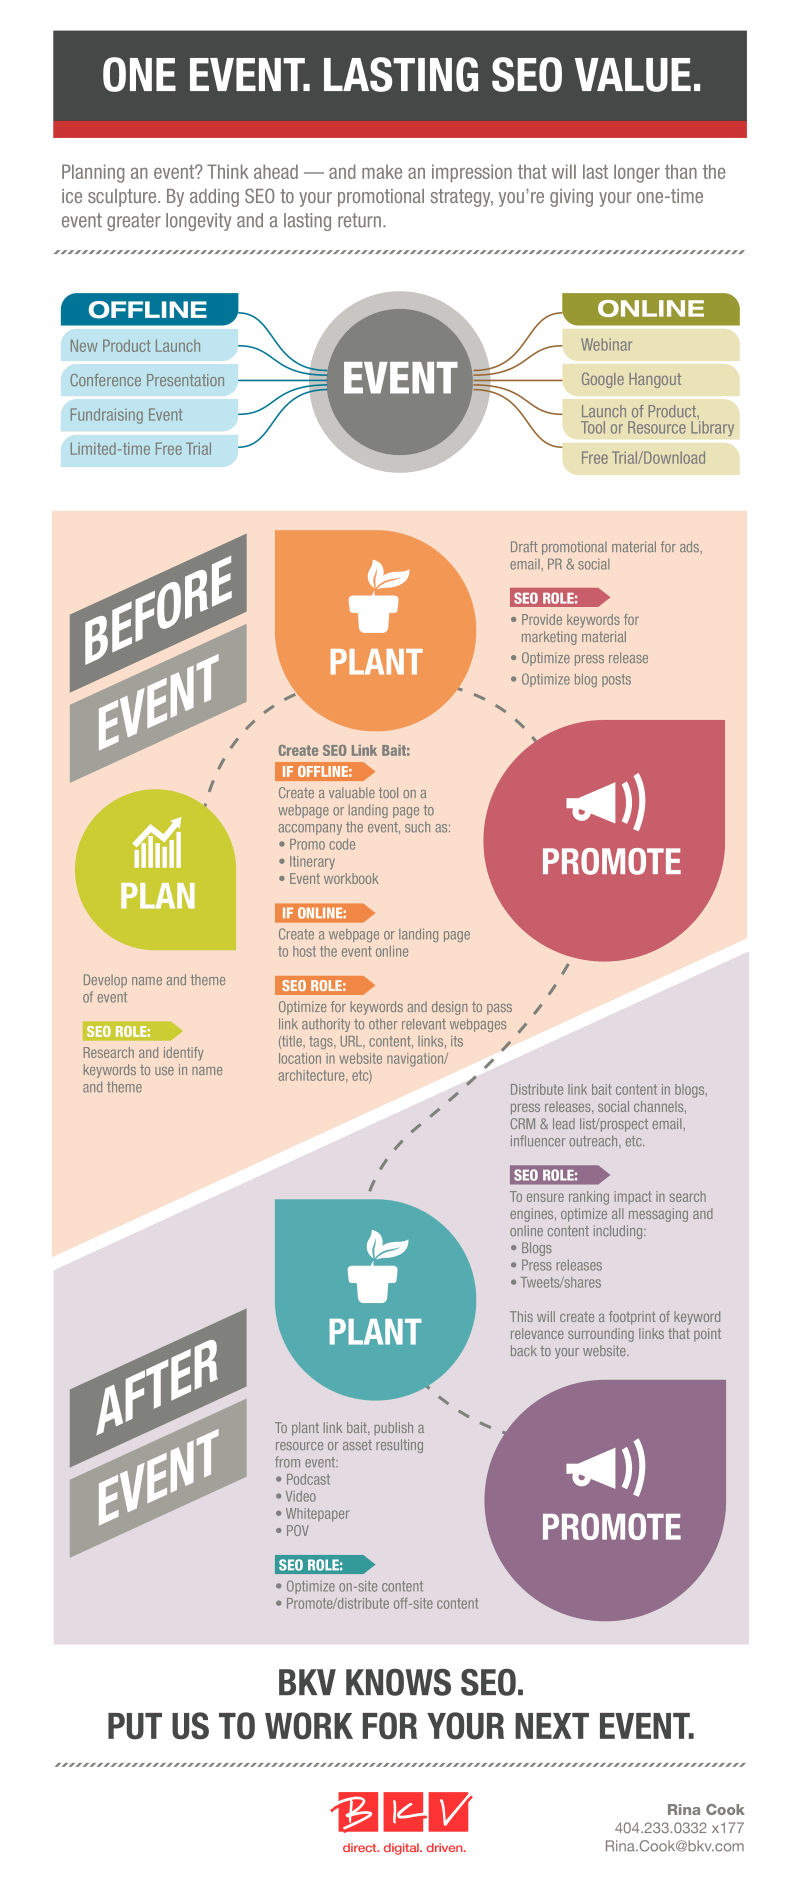 seo-event-marketing-advertising-roi-infographic-full1